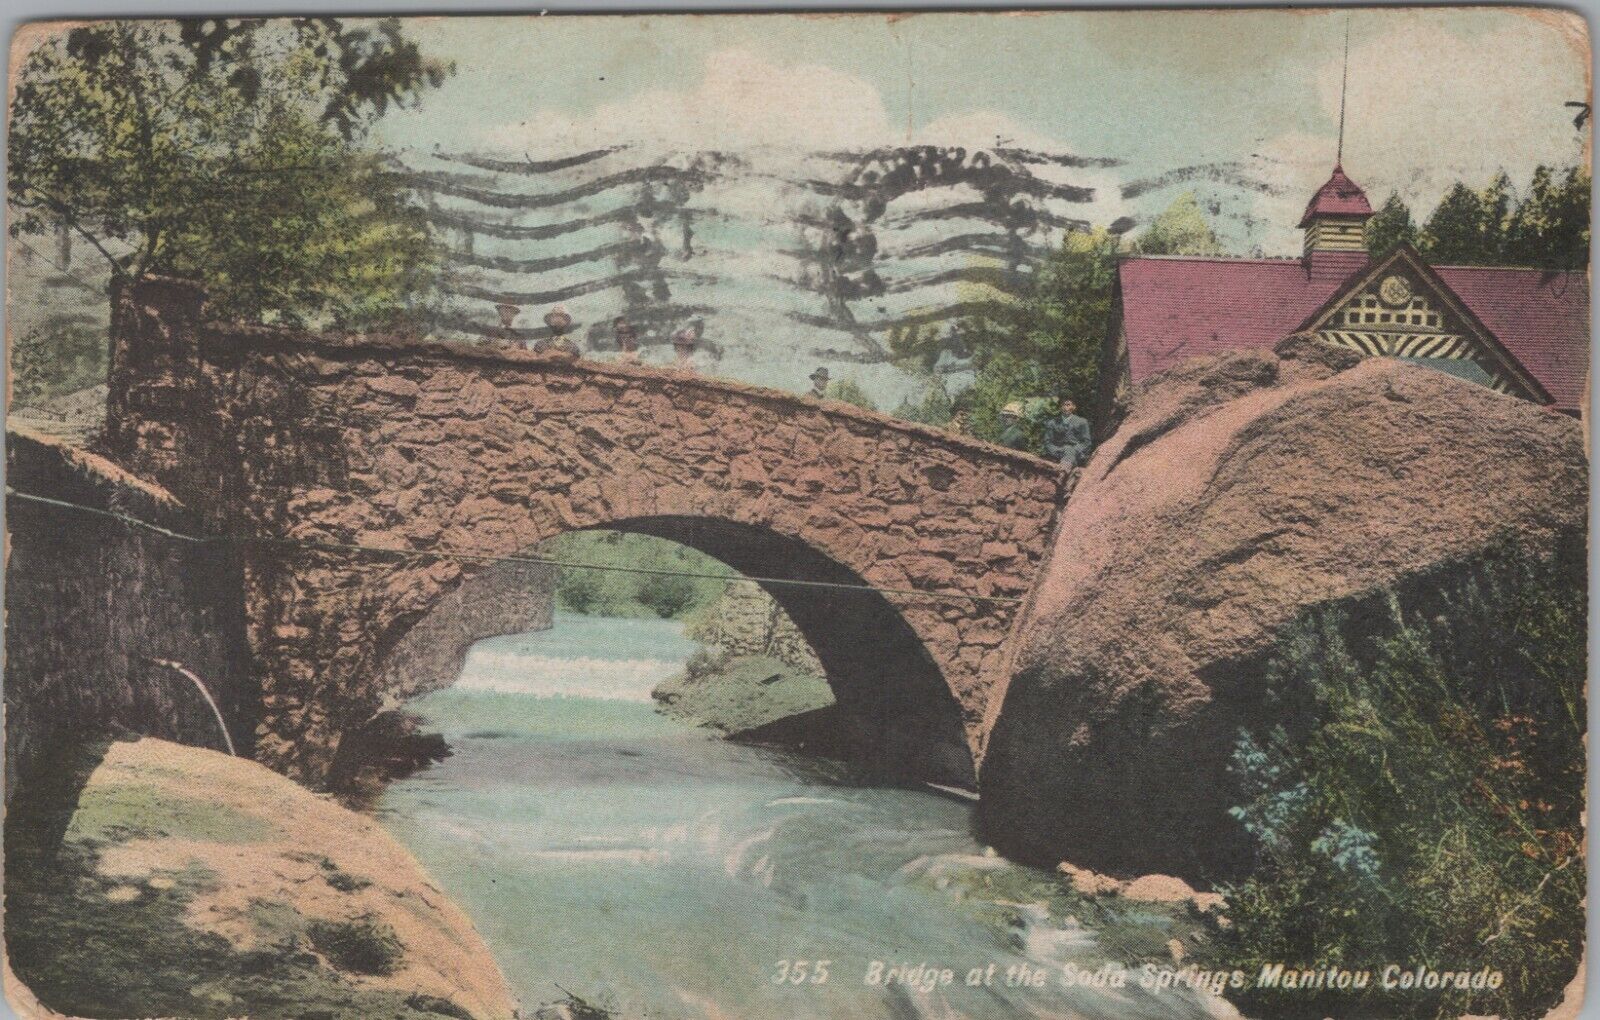 Soda Springs Manitou Colorado bridge c1910s postcard B174